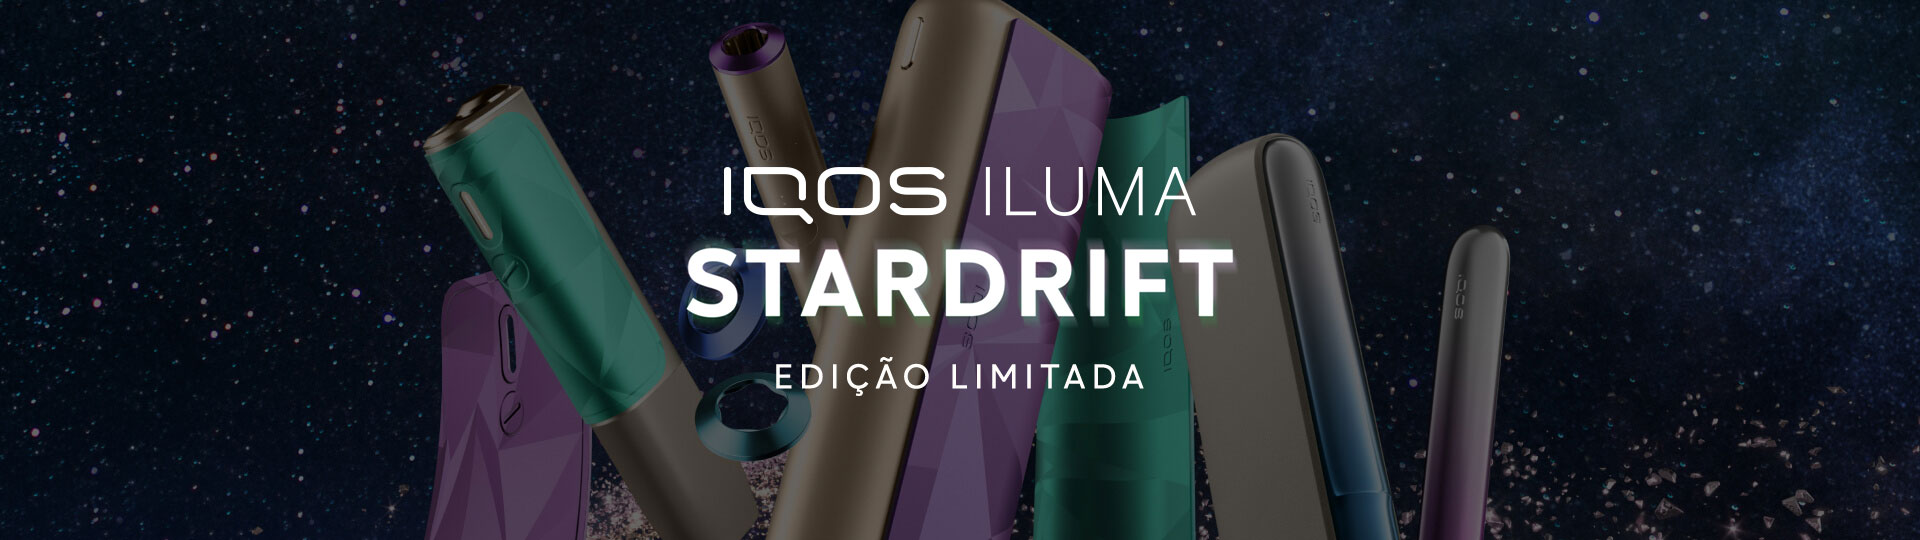 Stardrift Limited Edition accessories